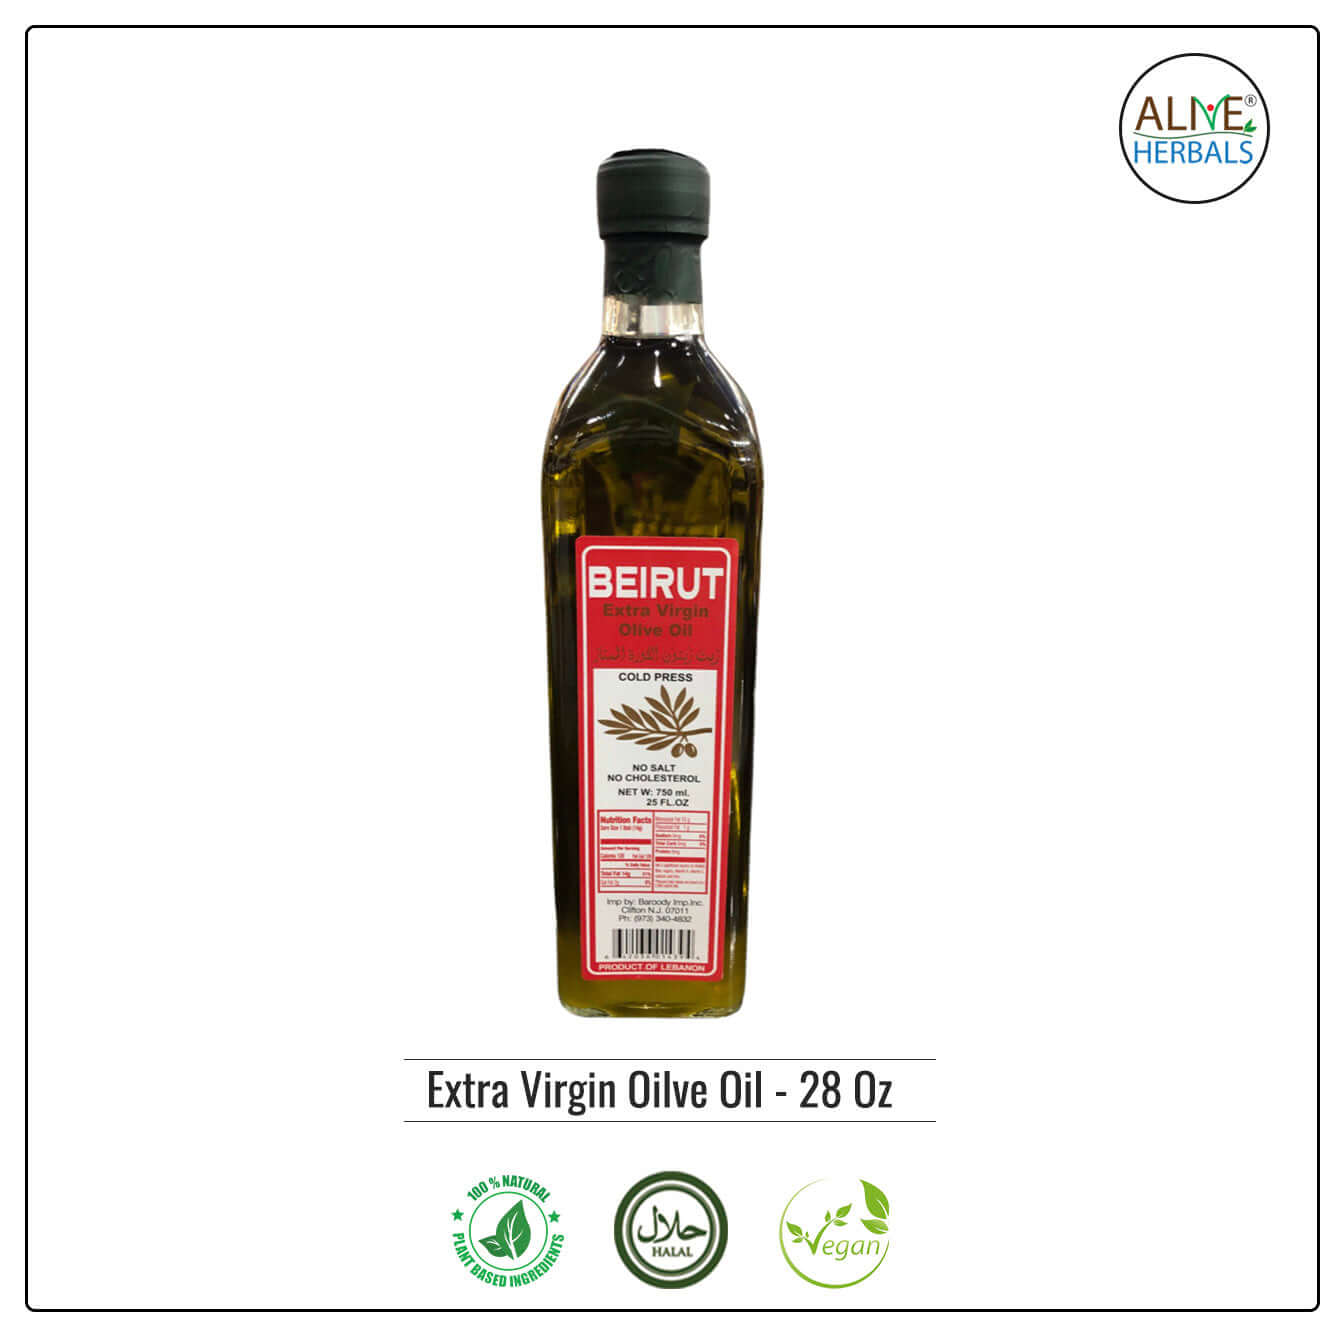 Extra Virgin Olive Oil - Beirut - Buy at Natural Food Store | Alive Herbals.